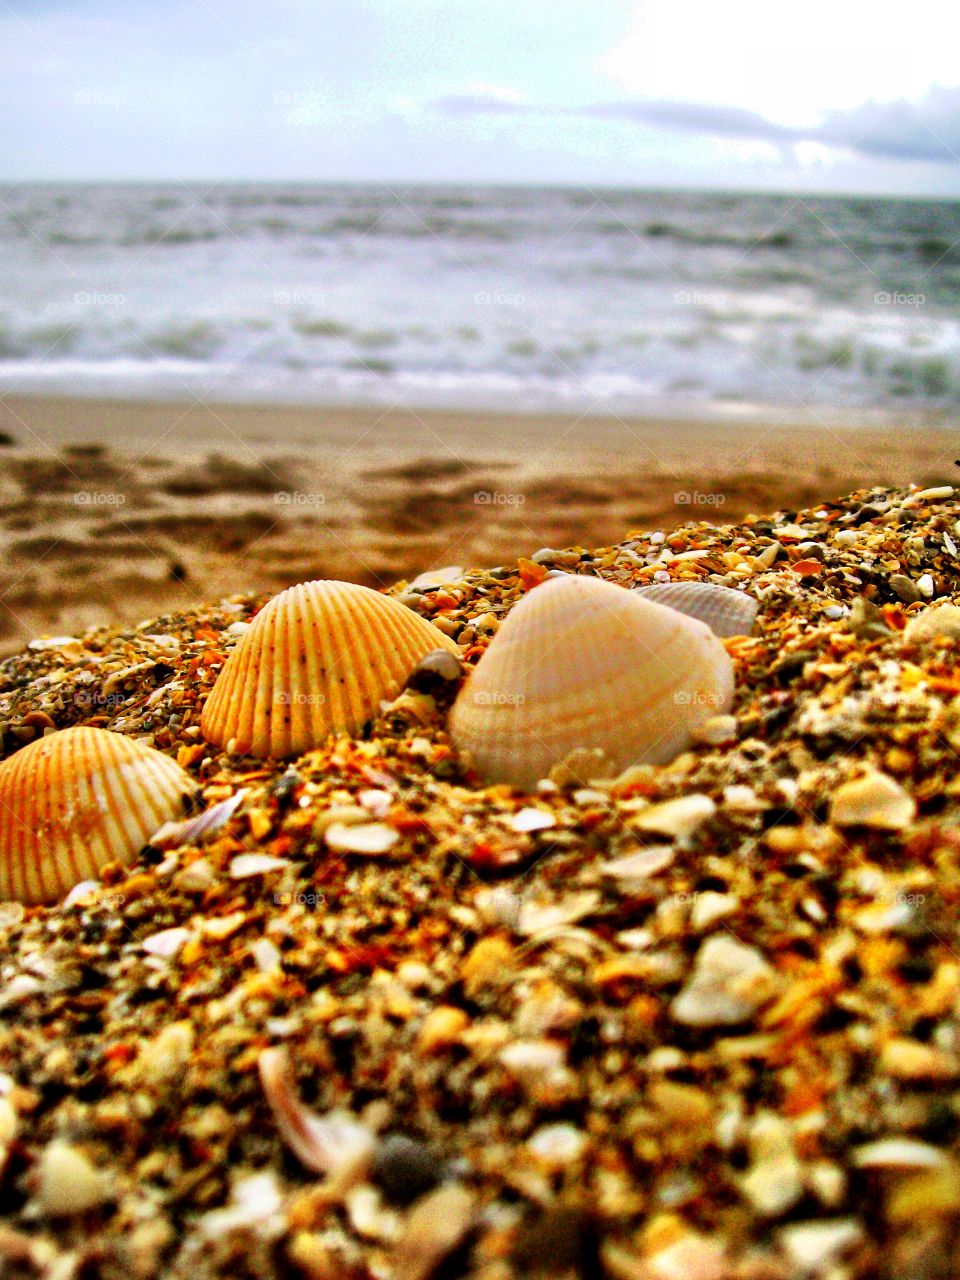 Shells on the beach. 